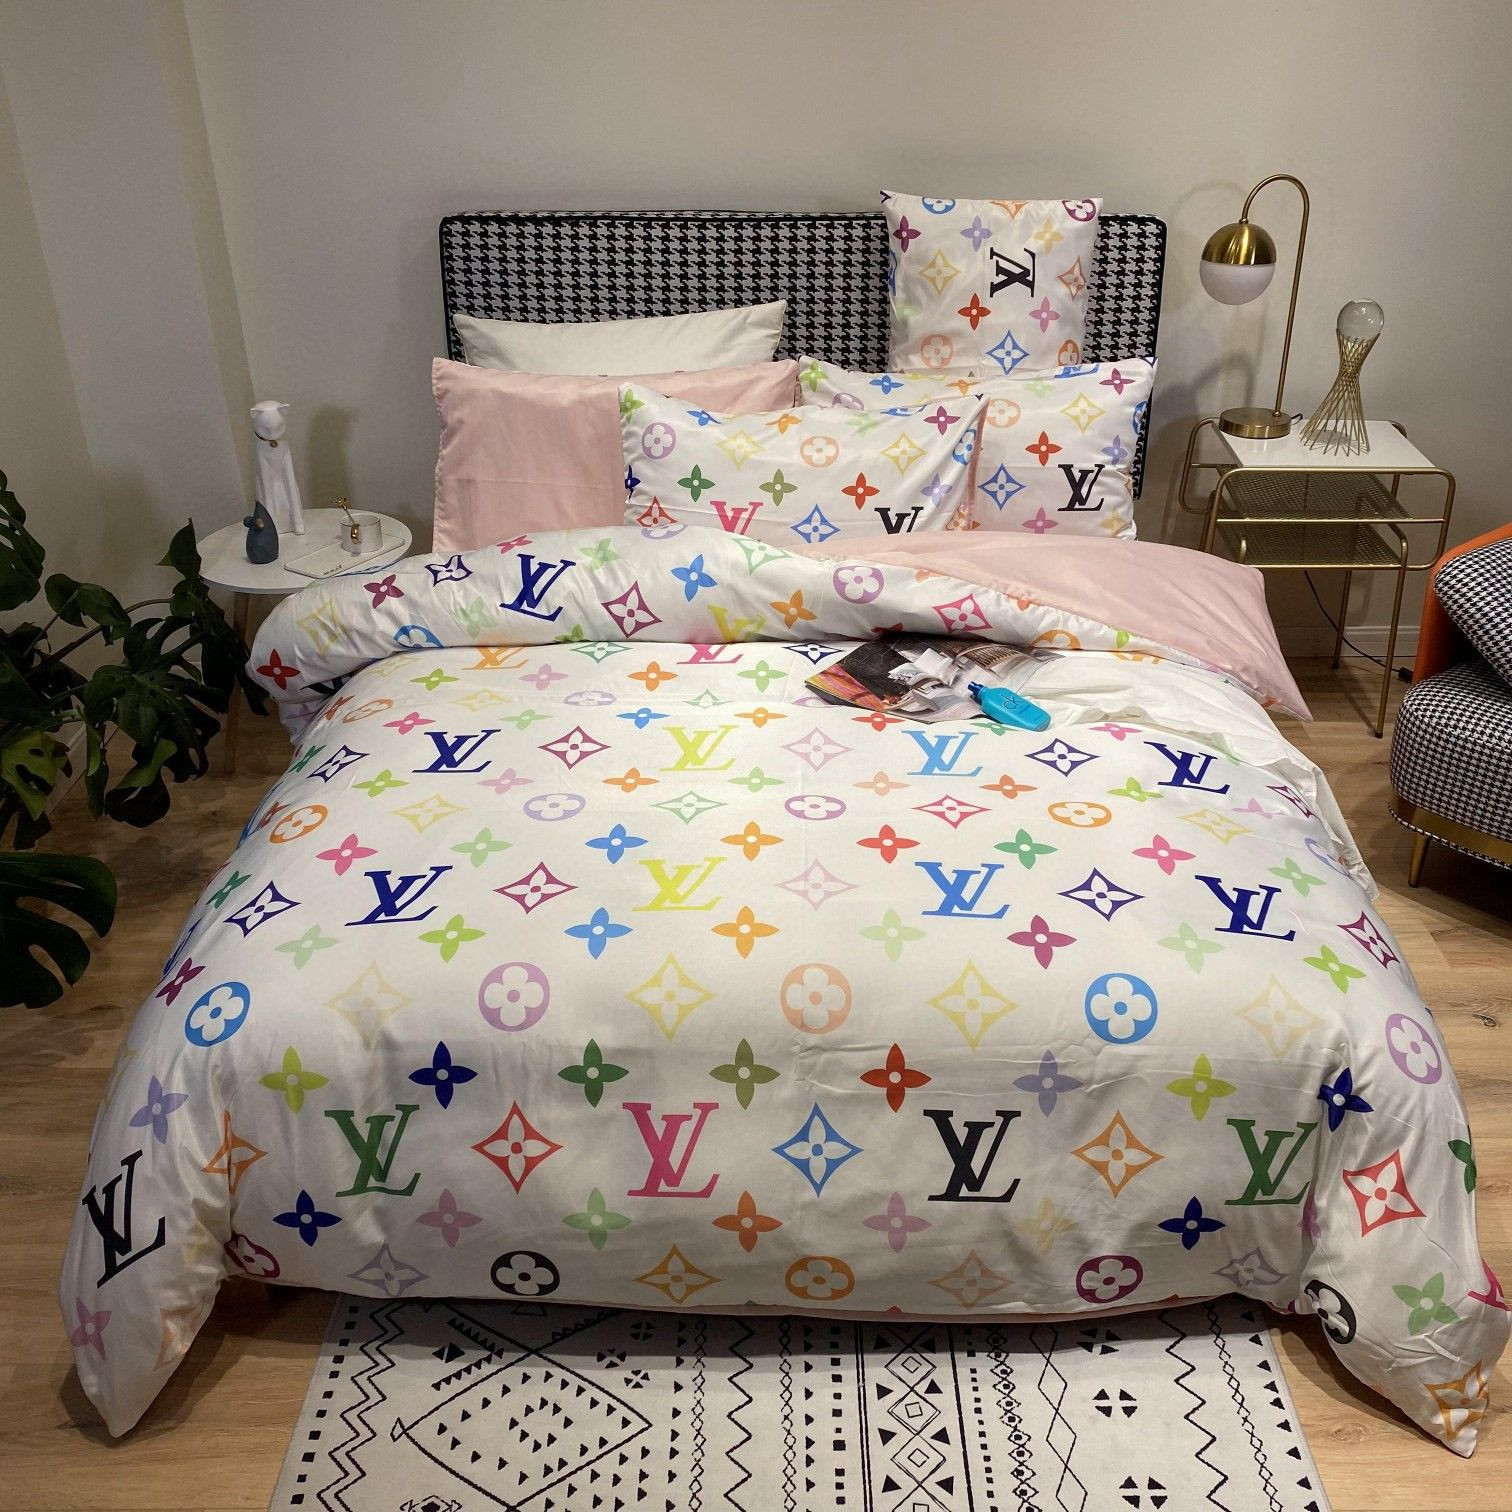 Lv Bedding Sets Duvet Cover Bedroom Luxury Brand Bedding Bedroom